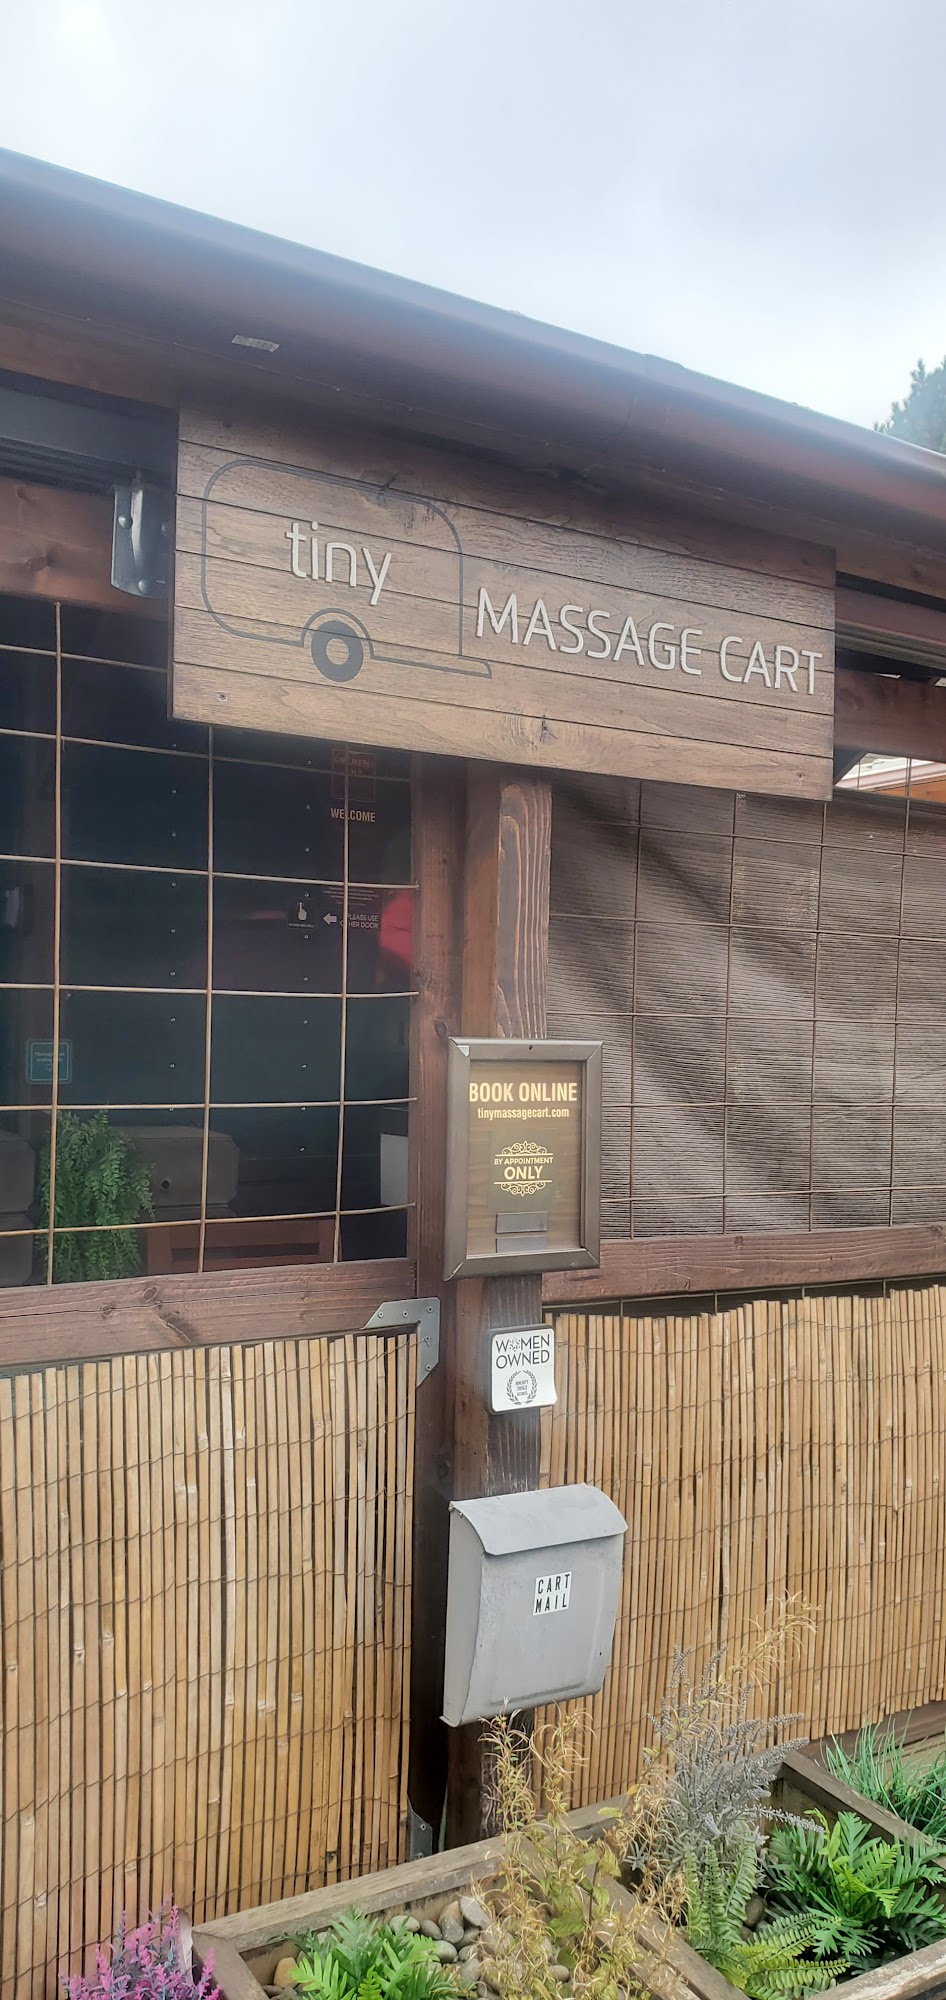 Tiny Massage Cart